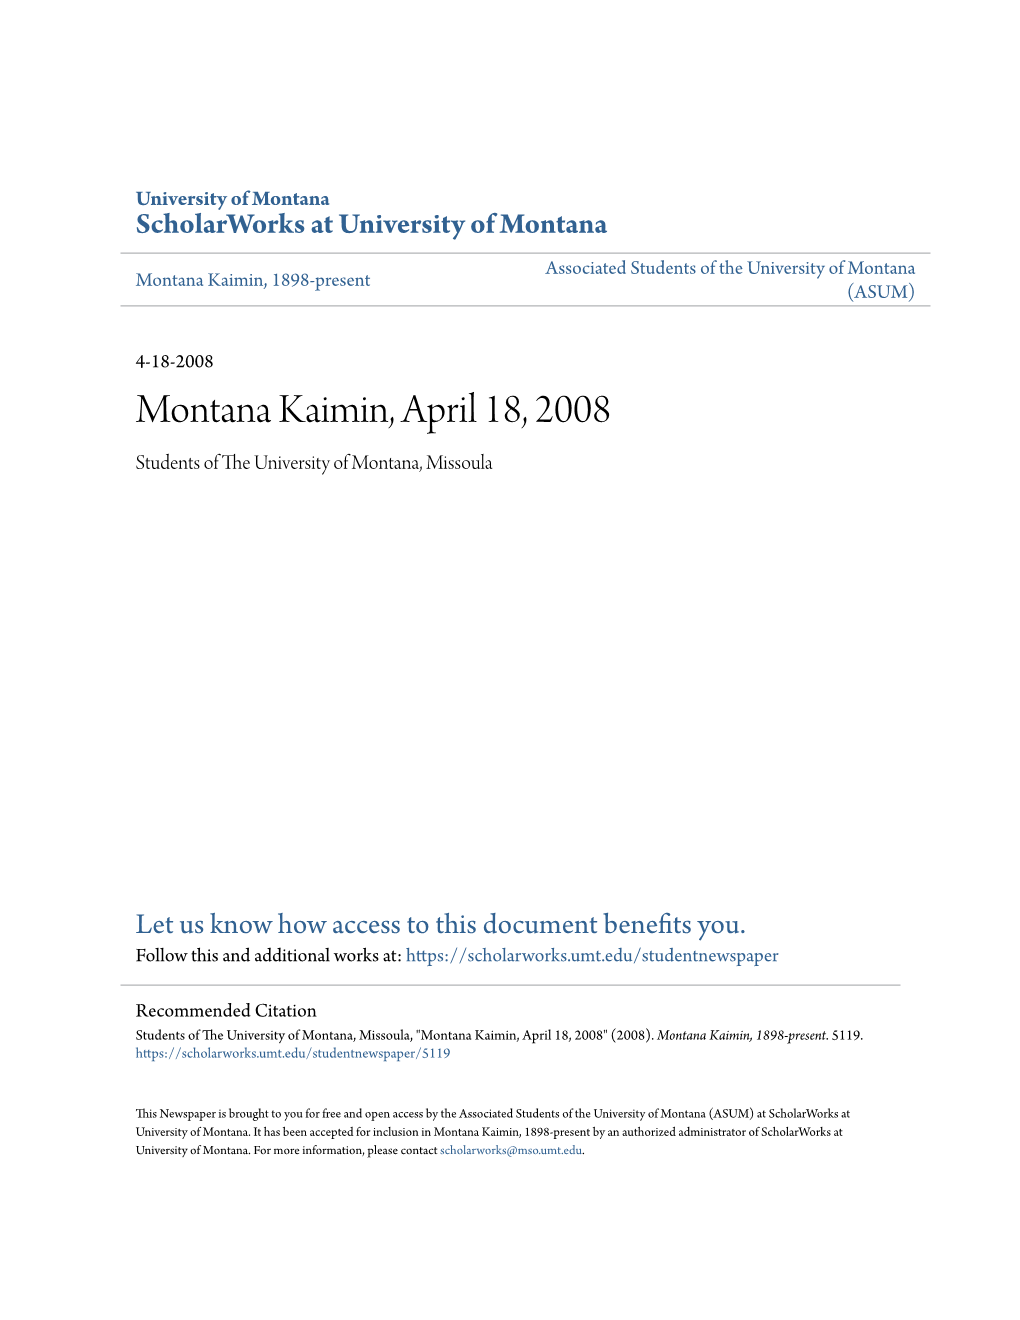 Montana Kaimin, April 18, 2008 Students of the Niu Versity of Montana, Missoula